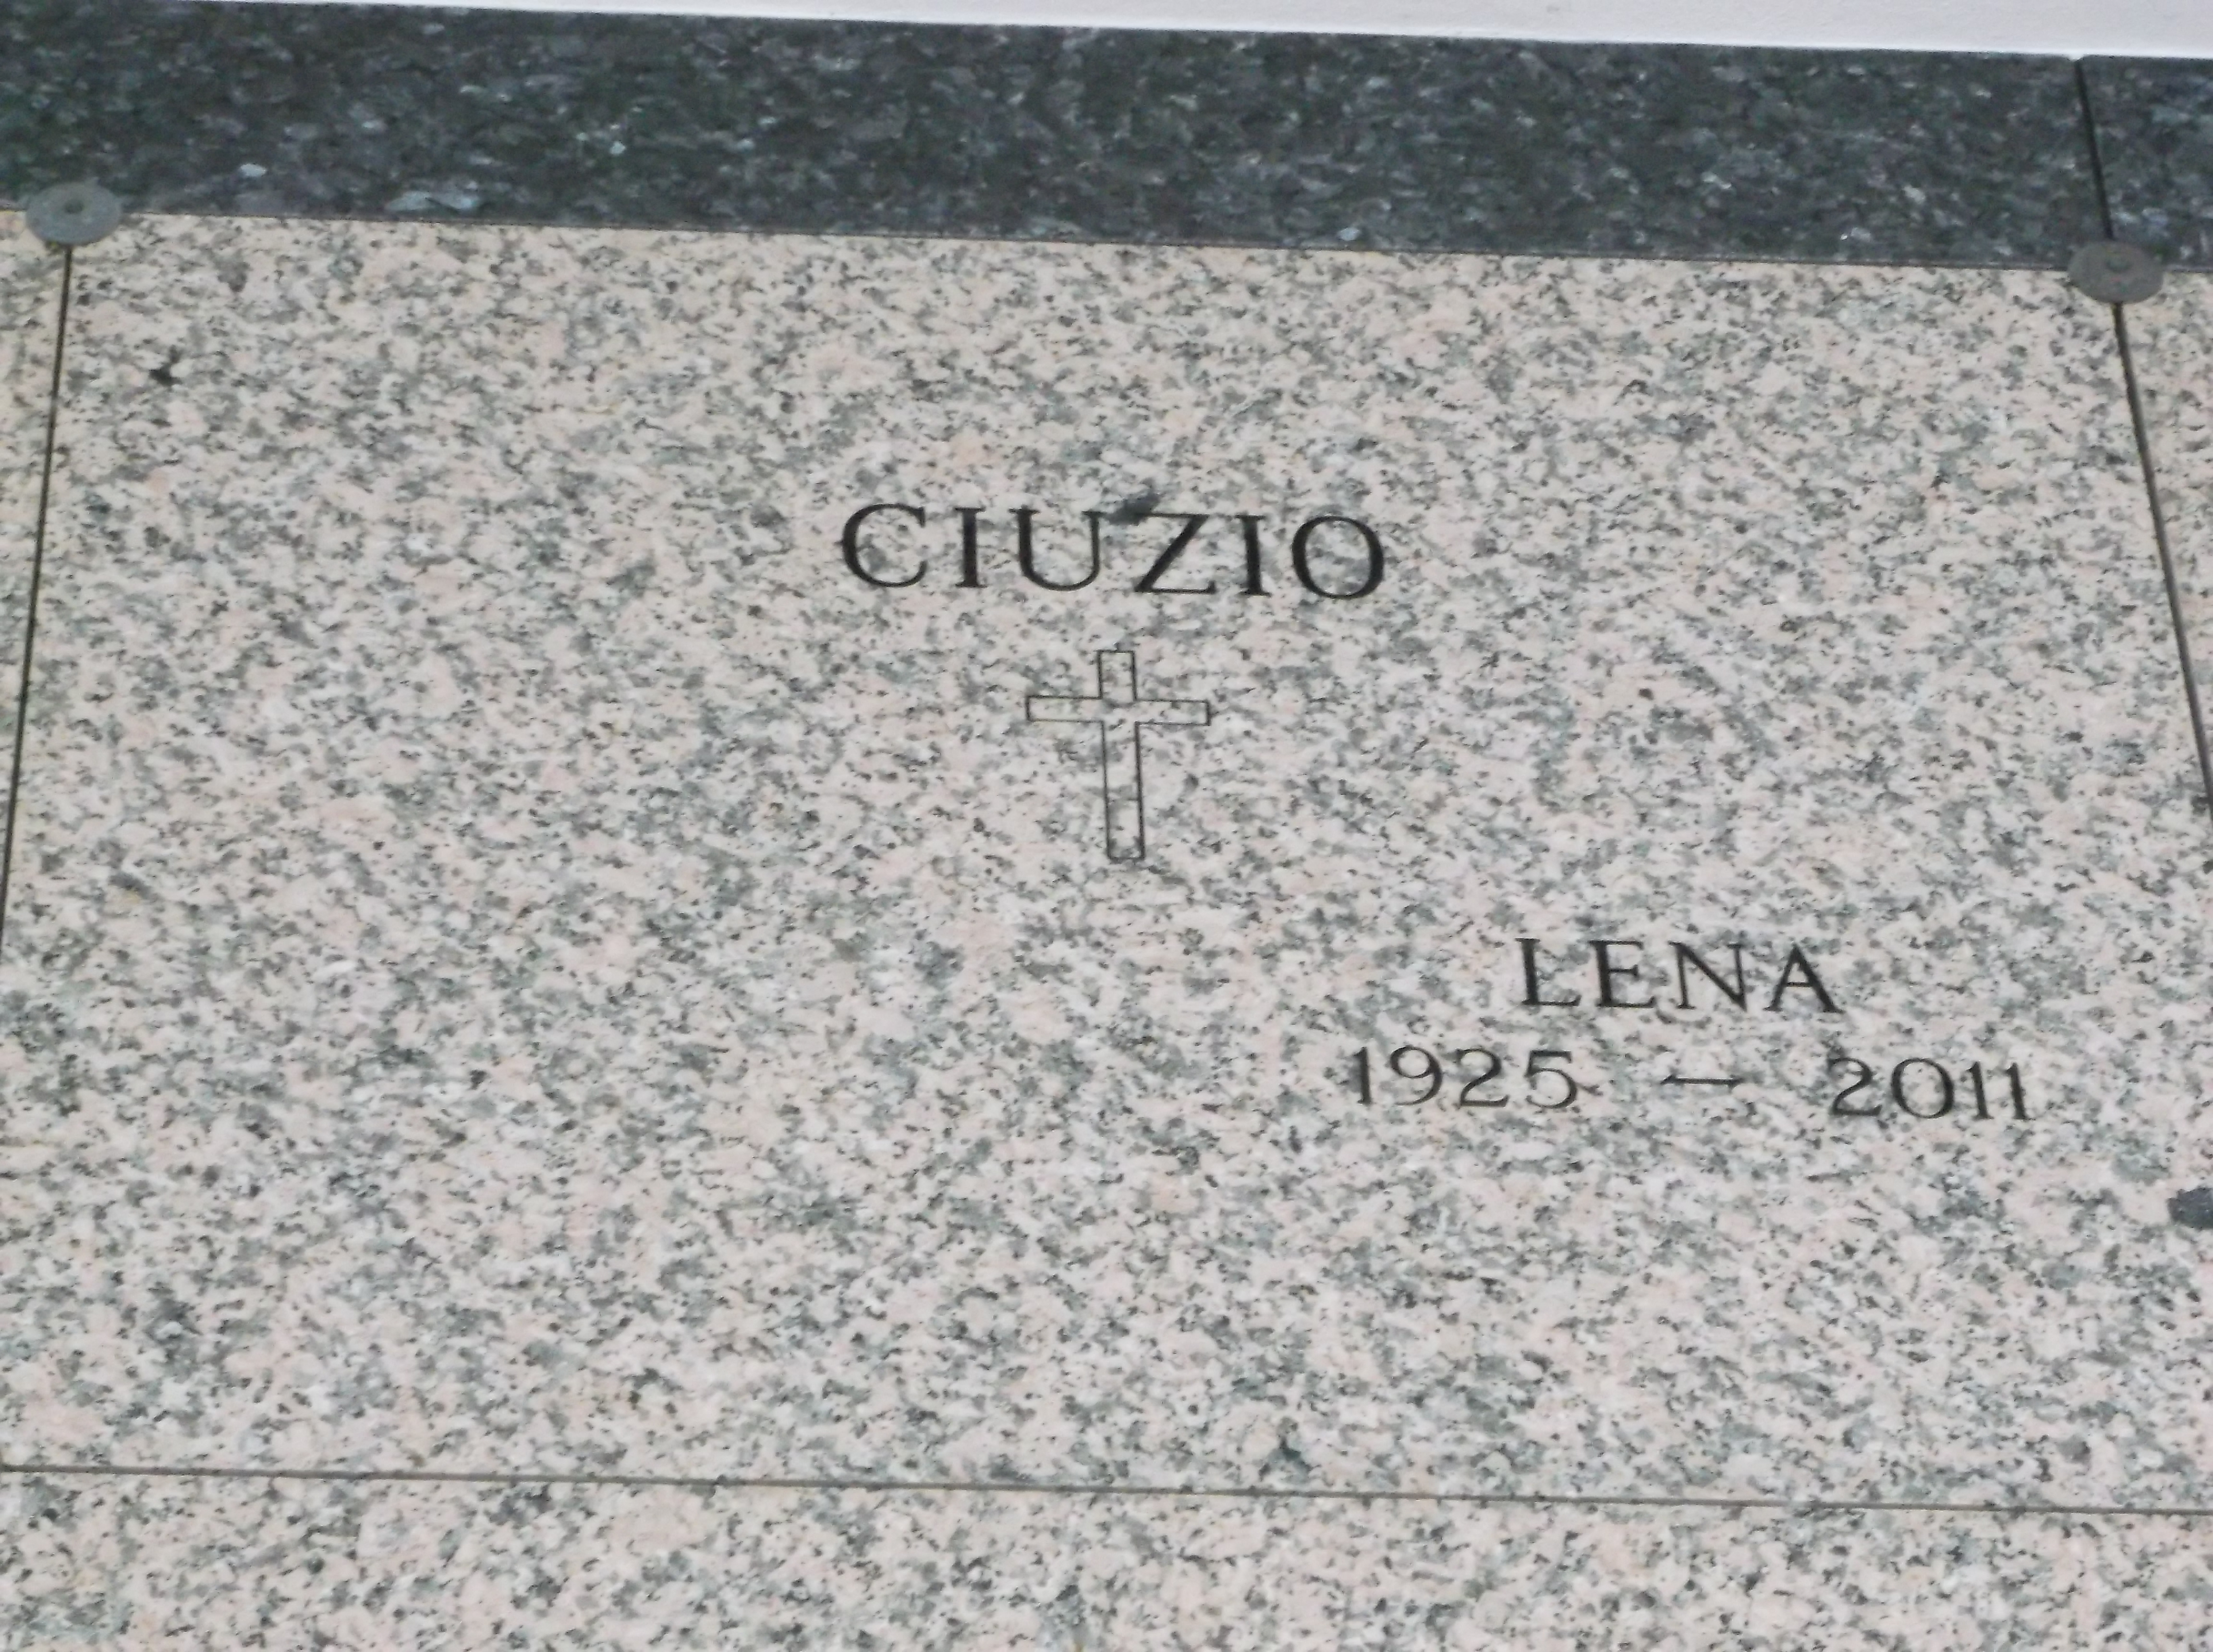 Lena Ciuzio